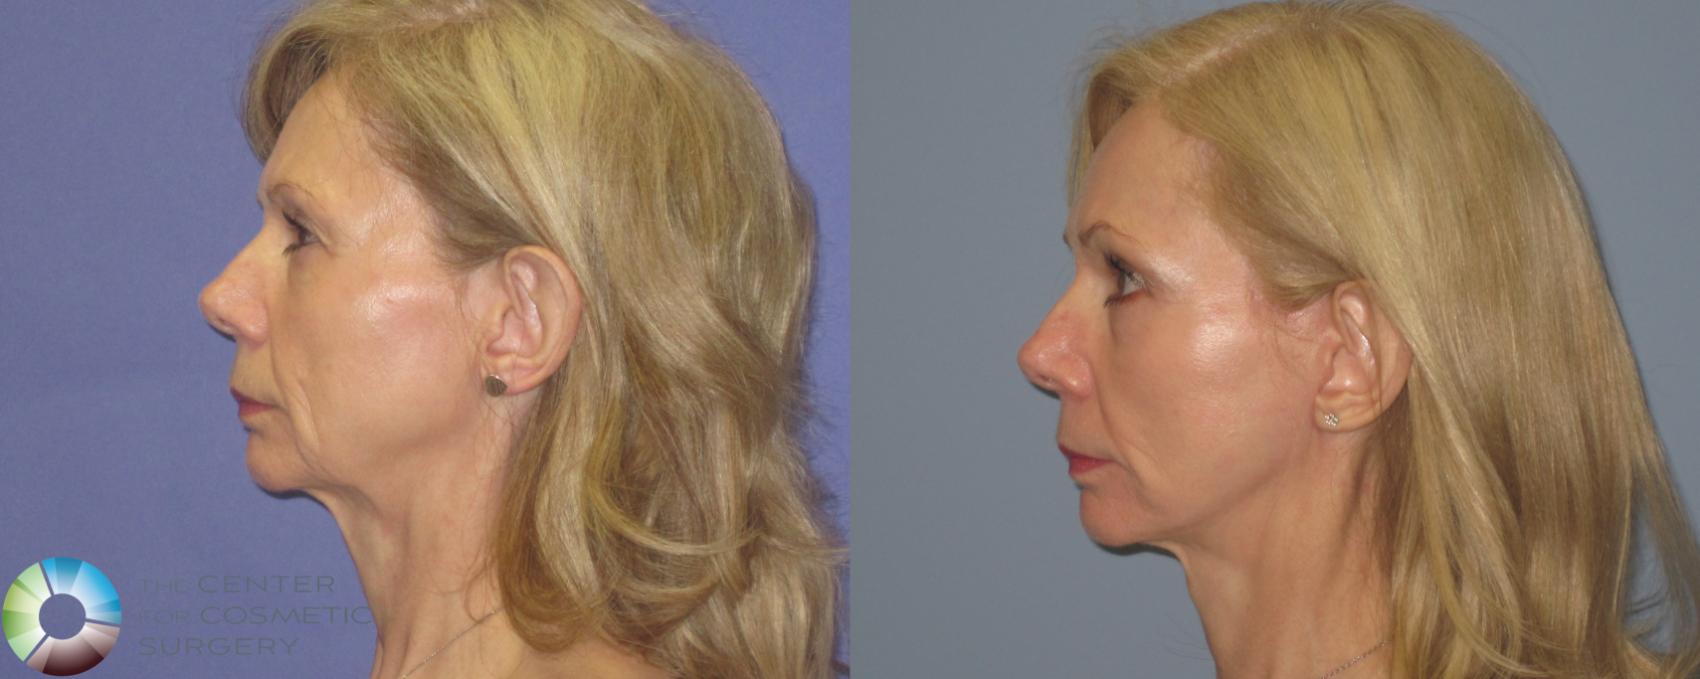 Before & After Laser Skin Resurfacing Case 460 View #3 View in Denver & Golden, CO